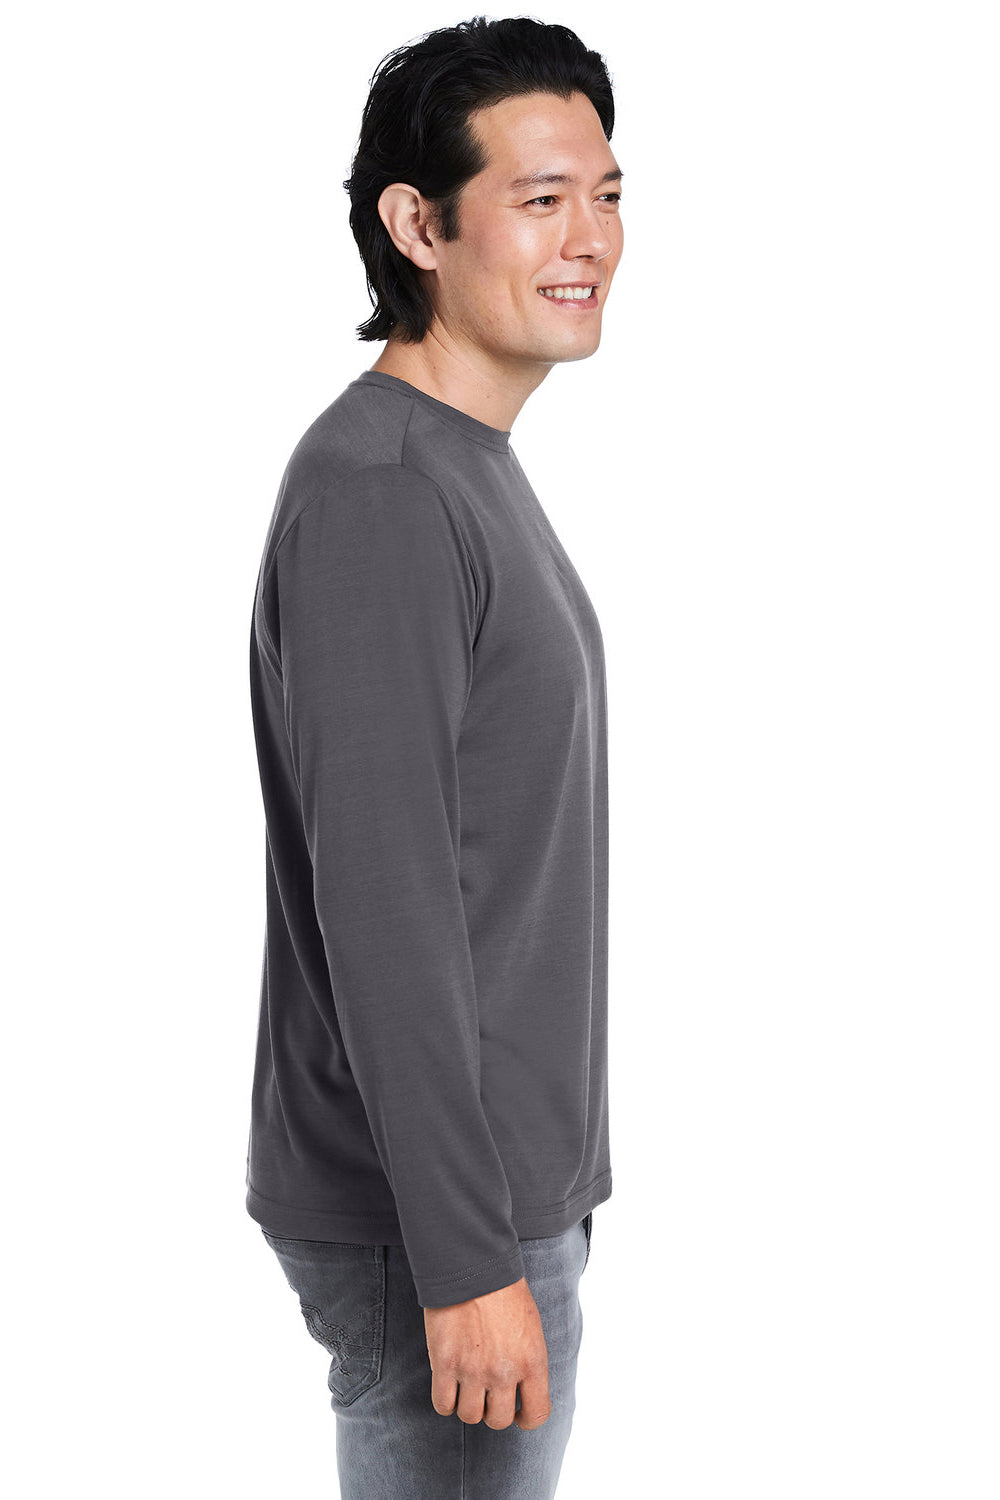 Core 365 CE111L Mens Fusion ChromaSoft Performance Moisture Wicking Long Sleeve Crewneck T-Shirt Carbon Grey Side